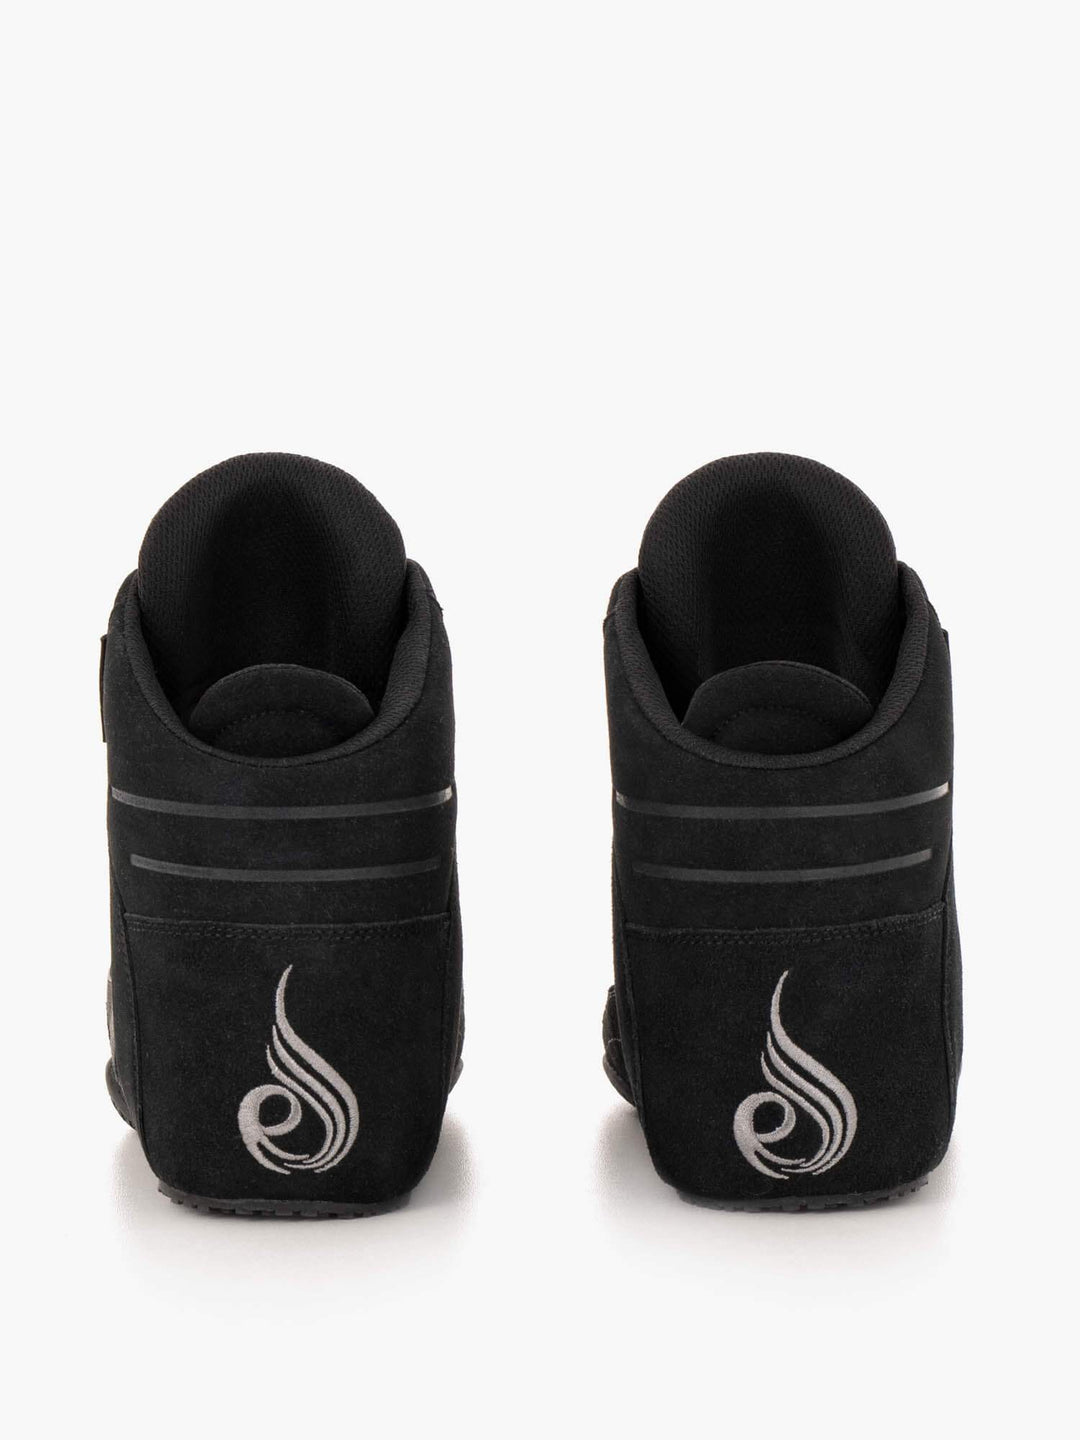 D-Mak Evo - Black Shoes Ryderwear 